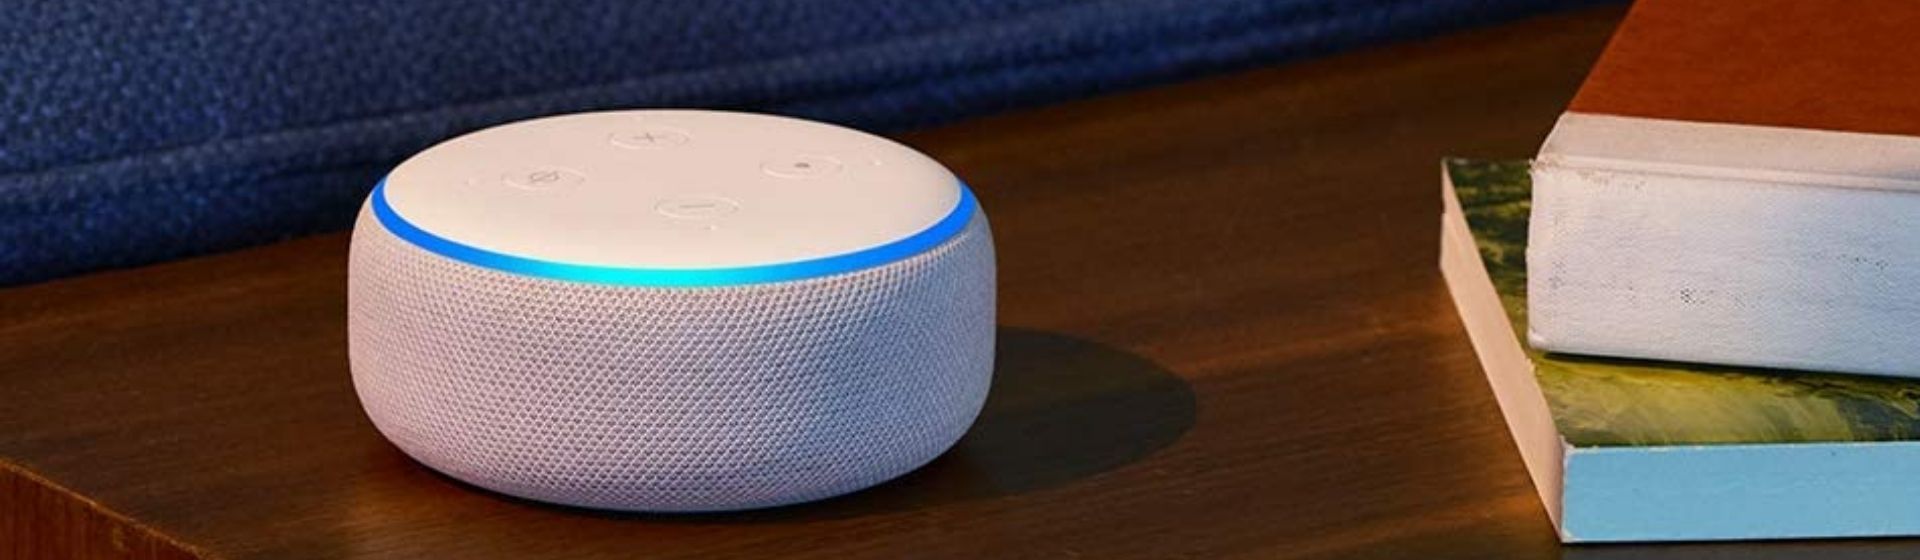 Echo Dot 3: vale a pena comprar esse smart speaker?